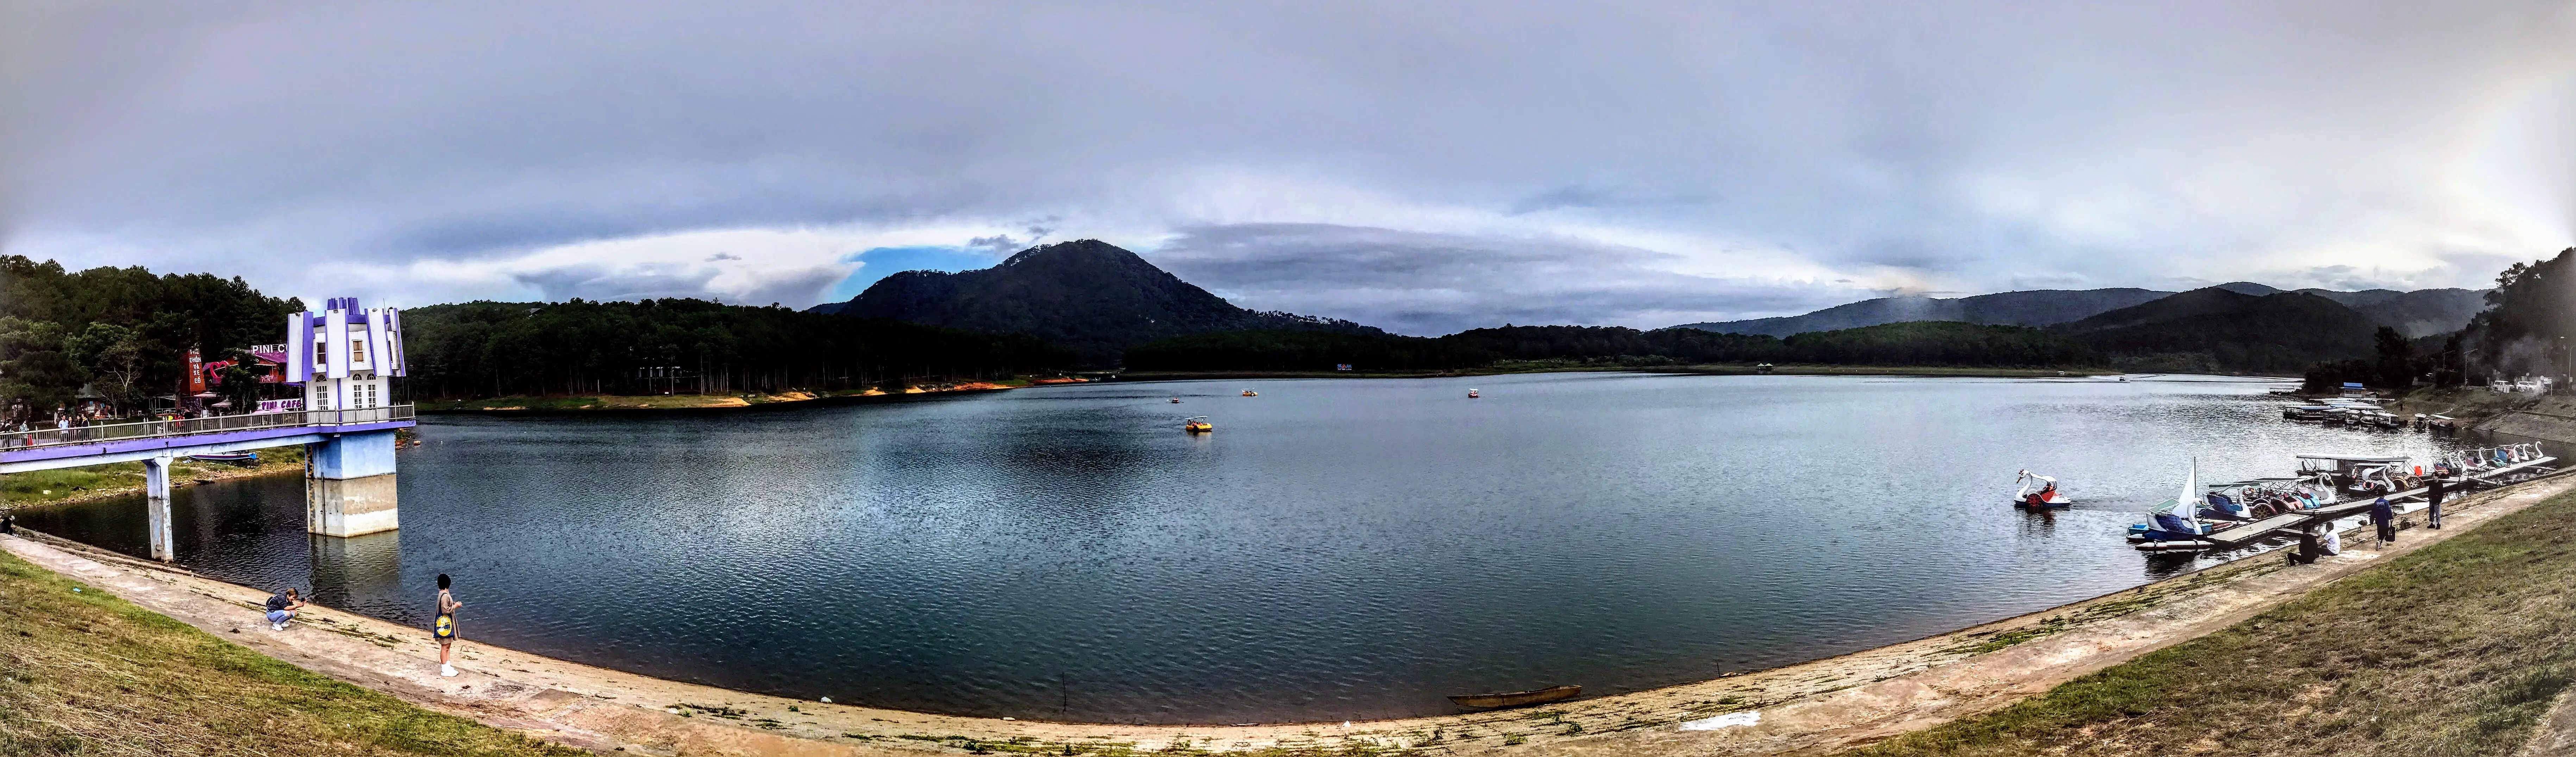 Tuyen Lam lake, Da Lat, Vietnam 